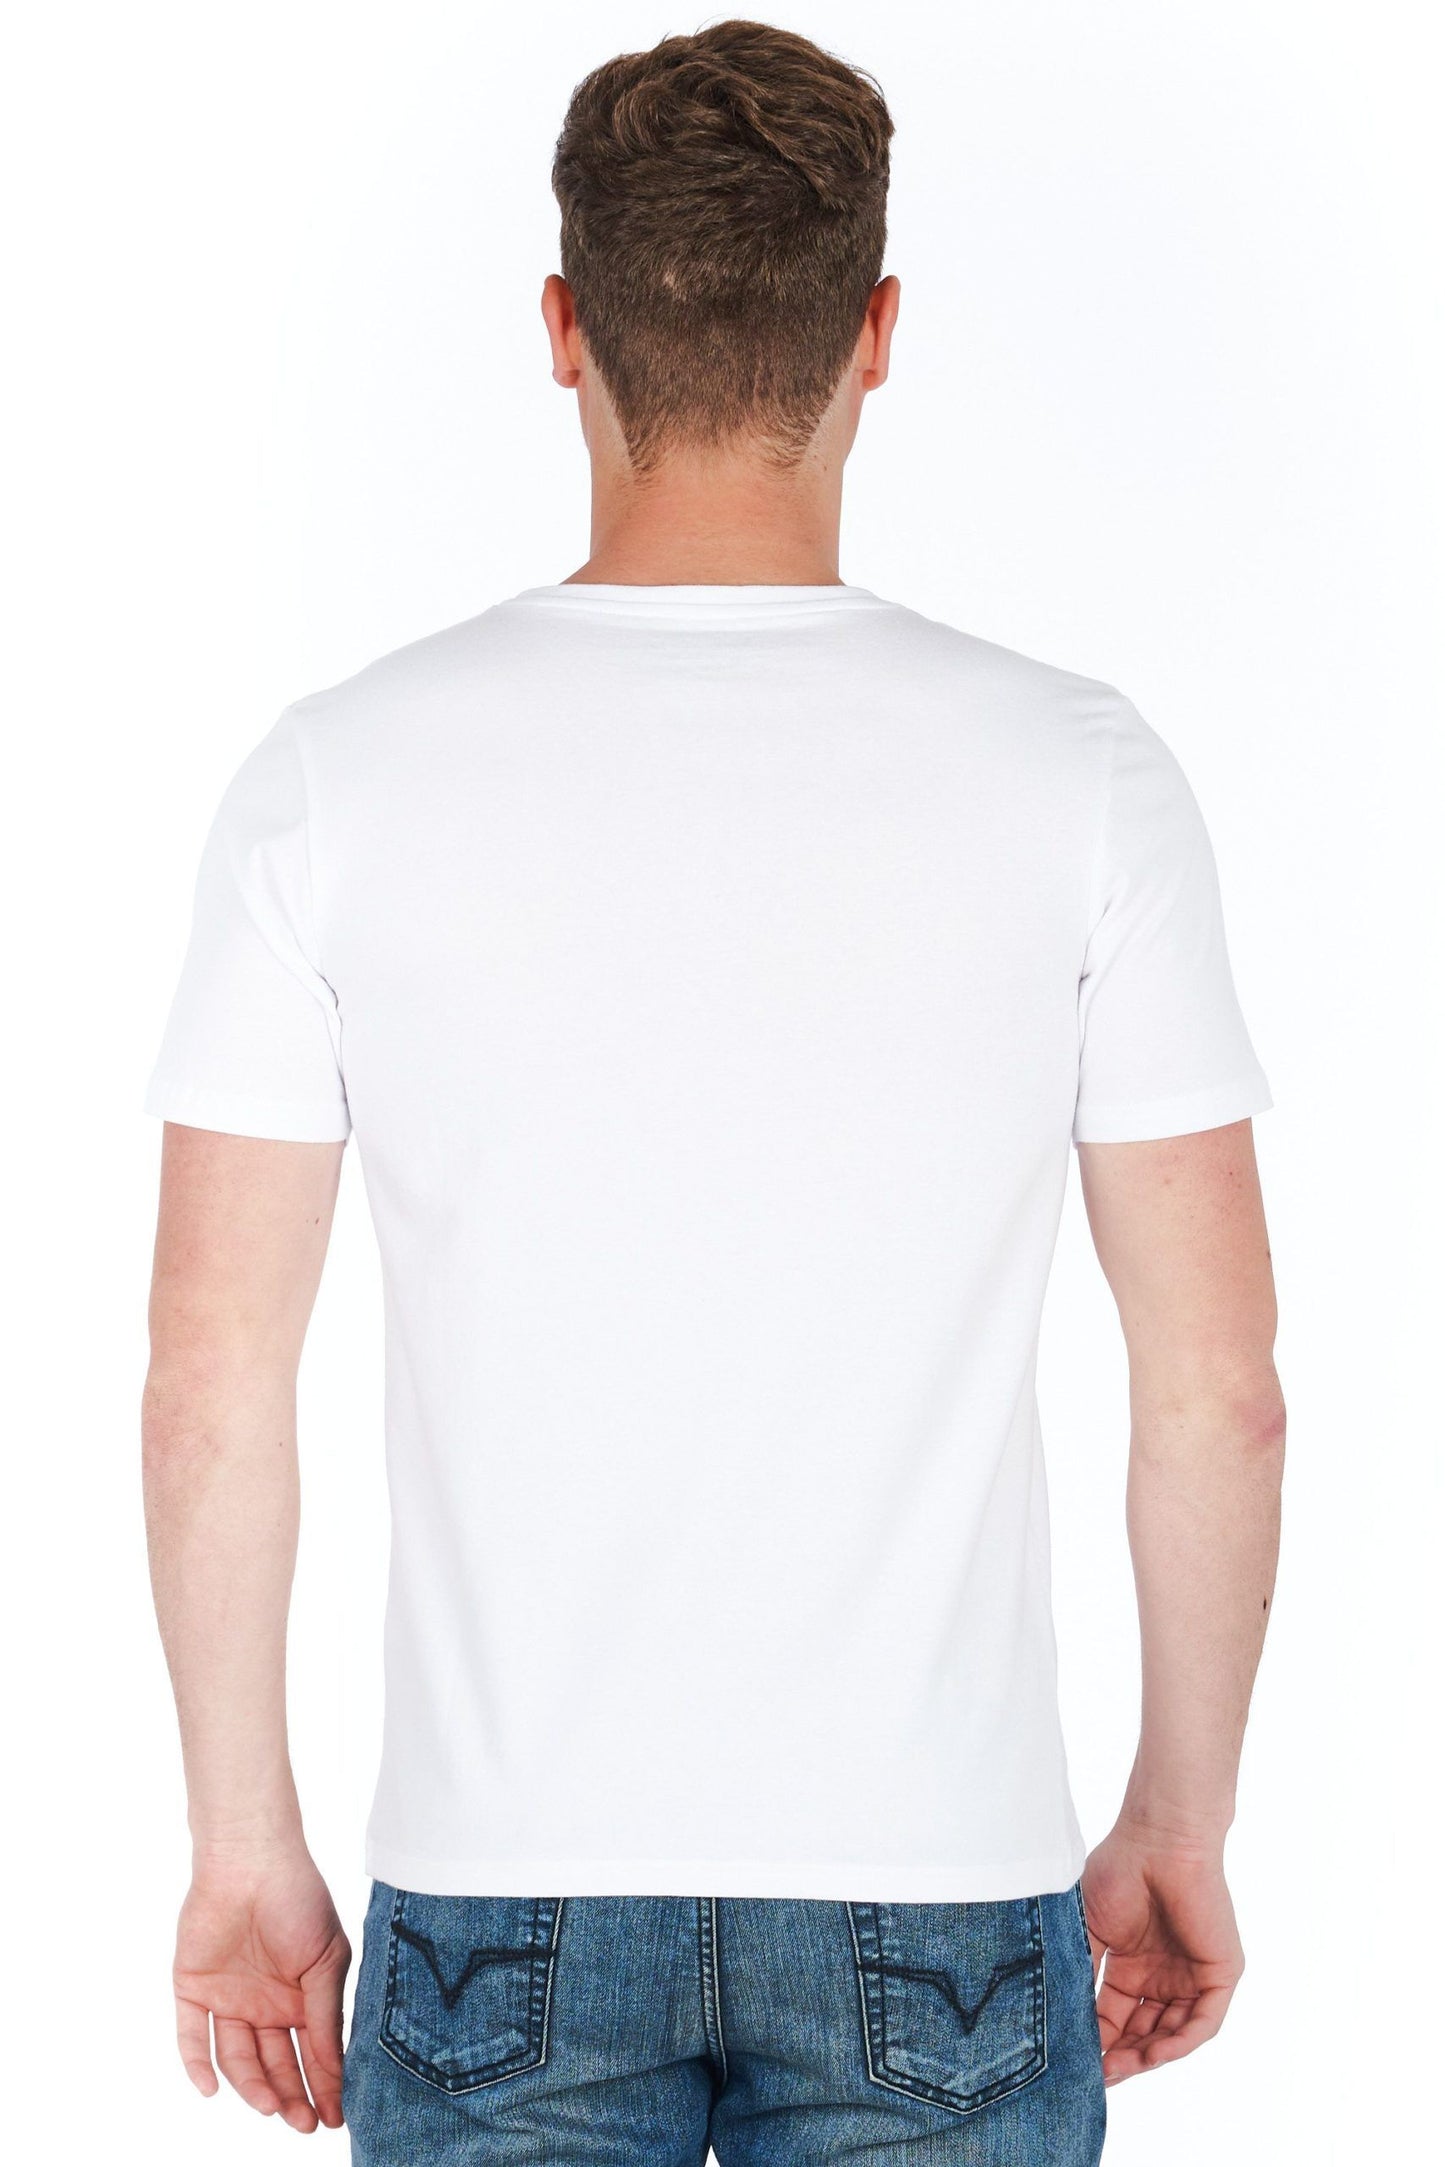 Sleek White Logo Tee with Slim Fit Design